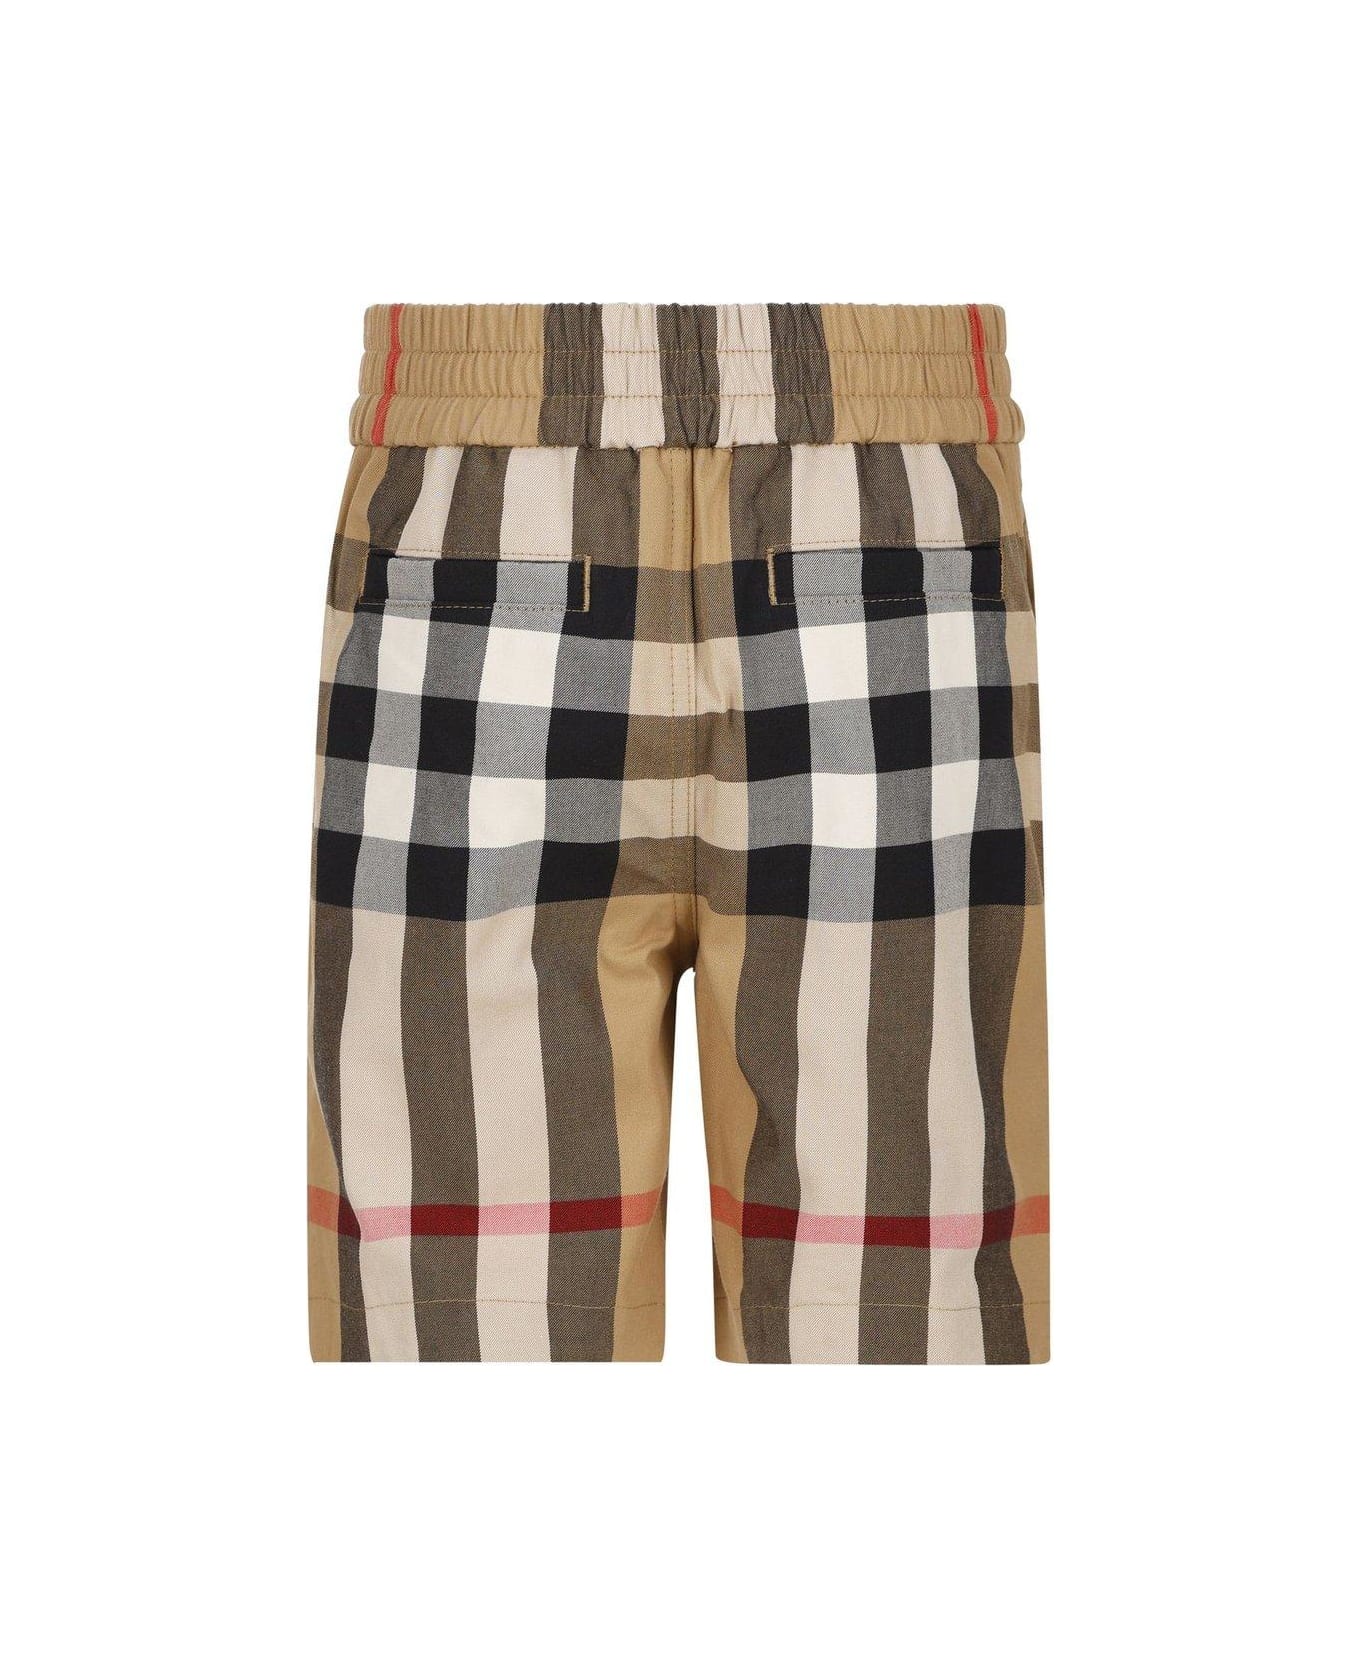 Burberry Check-printed High Waist Shorts - MULTICOLOUR